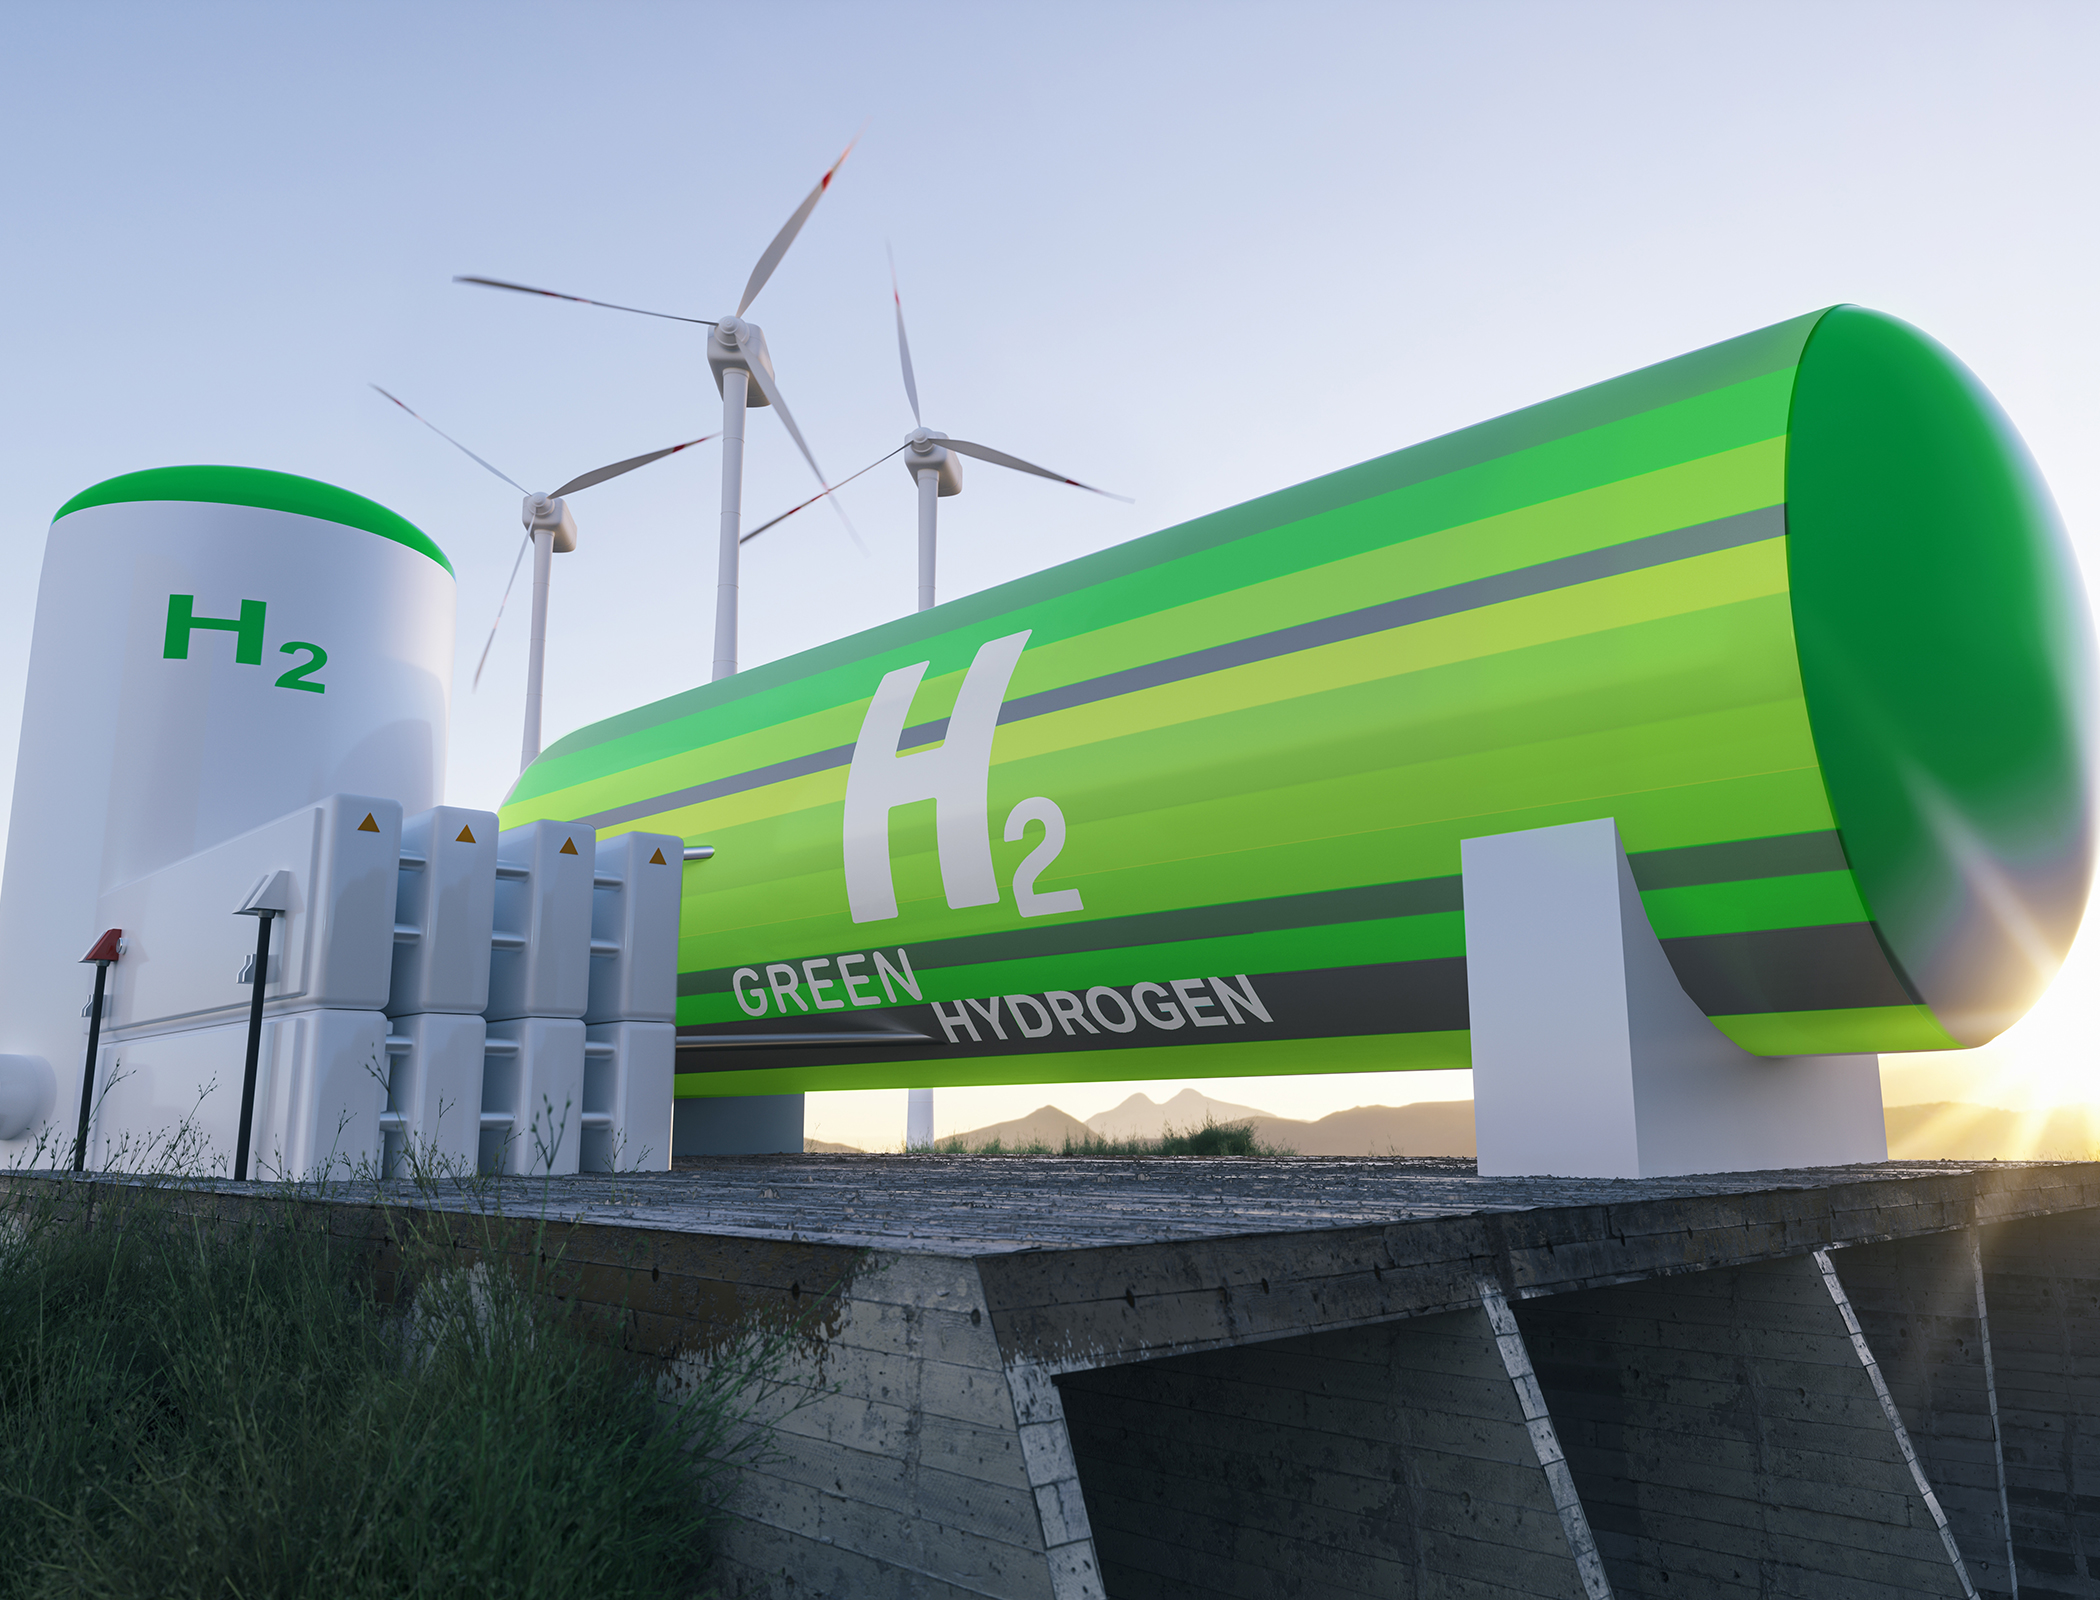 World’s first hydrogen-powered gas turbine run by European consortium